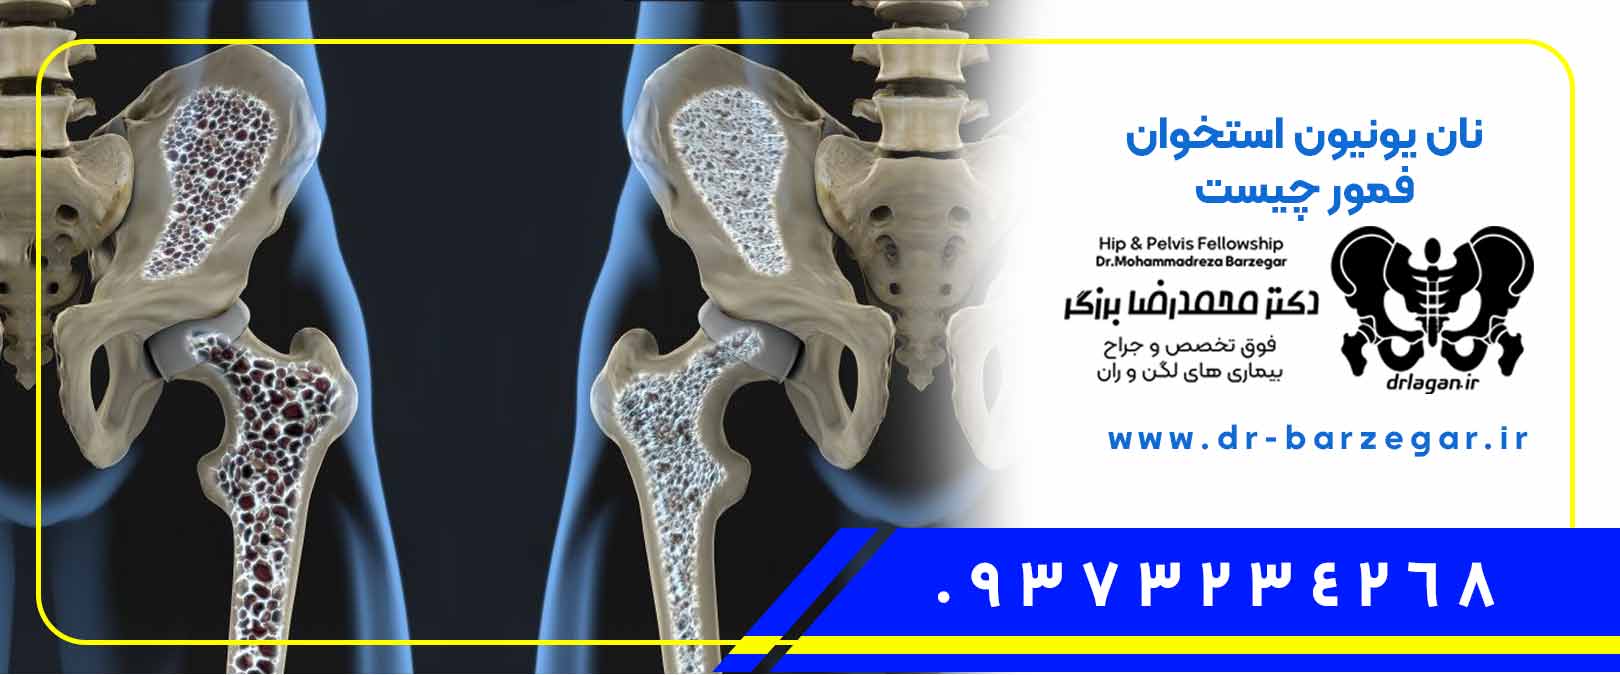 9567-nonunion-فوق-تخصص-درمان-جوش-نخوردن-شکستگی-استخوان-گردن-فمور-نان-یونیون-فمور-femor، انواع شکستگی گردن فمور, برای جوش خوردن شکستگی استخوان چی بخوریم, بهترین جراح ارتوپد لگن, بهترین جراح ارتوپد لگن تهران, پیوند استخوان, پیوند استخوان از لگن, پیوند استخوان از لگن به ساق پا, پیوند استخوان از لگن به فک, پیوند استخوان پا, پیوند استخوان تنه ران, پیوند استخوان چگونه انجام میشود, پیوند استخوان چیست, پیوند استخوان دندان برای ایمپلنت, پیوند استخوان ران, پیوند استخوان ران به فک, پیوند استخوان ران چگونه انجام میشود, پیوند استخوان سر فمور, پیوند استخوان فمور, پیوند استخوان فمورد, پیوند استخوان فموری, پیوند استخوان لگن, پیوند استخوان لگن برای ایمپلنت, پیوند استخوان لگن به فک, پیوند استخوان لگن به لثه, پیوند استخوان لگن به مچ دست, پیوند استخوان لگن چیست, پیوند استخوان مفصل ران, جراح ارتوپد فوق تخصص لگن, جراح ارتوپد لگند, جراح ارتوپد لگنو, جراح ارتوپد لگنی, جراح متخصص ارتوپد لگن, جراحی ارتوپد لگن, جراحی ارتوپدی لگن, جراحی شکستگی گردن فمور, جوش خوردن استخوان, جوش خوردن استخوان پا, جوش خوردن استخوان متاتارس پنجم, جوش خوردن شکستگی استخوان, جوش خوردن شکستگی استخوان بازو, جوش خوردن شکستگی استخوان در طب سنتی, جوش نخوردگی استخوانی, جوش نخوردن استخوان, جوش نخوردن استخوان بازو, جوش نخوردن استخوان بینی, جوش نخوردن استخوان ترقوه, جوش نخوردن استخوان ساق پا, جوش نخوردن استخوان شکسته, جوش نخوردن استخوان متاتارس, درمان جوش خوردن شکستگی استخوان, درمان شکستگی فمور, درمان شکستگی فمور بدون جراحی, درمان شکستگی فمور لگن, درمان شکستگی گردن فمور, درمان نانیونیون اصفهان, درمان نانیونیون چیست, درمانان یونیون استخواند, درمانان یونیون استخوانی, دیه پیوند استخوان ران, زمان جوش خوردن شکستگی استخوان, شکستگی استخوان گردن فمور, شکستگی فمور, شکستگی فمور پا, شکستگی فمور پلاتین, شکستگی فمور چیست, شکستگی فمور در جوانان, شکستگی فمور در سالمندان, شکستگی فمور در کودکان, شکستگی فمور لگن, شکستگی فمور نی نی سایت, شکستگی فمورال, شکستگی گردن فمور, شکستگی گردن فمور در افراد مسن, شکستگی گردن فمور لگن, شکستگی گردن فمور مقاله, شکستگی های گردن فمور, علائم جوش خوردن شکستگی استخوان, علائم جوش نخوردن شکستگی استخوان, علت جوش نخوردن استخوان, علت جوش نخوردن استخوان انگشت پا, علت جوش نخوردن استخوان بازو, علت جوش نخوردن استخوان ترقوه, علت جوش نخوردن استخوان ران, علت جوش نخوردن استخوان ساق پا, علت جوش نخوردن استخوان شکسته, علت جوش نخوردن استخوان کف پا, علت جوش نخوردن استخوان مچ دست, علت جوش نخوردن استخوان نازک نی پا, عمل پیوند استخوان ران, عمل پیوند استخوان ران پا, عمل جراحی شکستگی فمور, عمل شکستگی استخوان فمور, عمل شکستگی ران, عمل شکستگی ران پا, عمل شکستگی ران نی نی سایت, عمل شکستگی ران و لگن, عمل شکستگی فمور, عمل شکستگی گردن فمور, عمل مجدد لگنی, عوارض جوش نخوردن شکستگی استخوان, عوارض شکستگی گردن فمور, عوارض عمل شکستگی فمور, فوق تخصص جراح لگن, فوق تخصص جراحي سينه در تهران, فوق تخصص جراحی لگن, فوق تخصص جراحی لگن اصفهان, فوق تخصص جراحی لگن تهران, فوق تخصص جراحی لگن در اصفهان, فوق تخصص جراحی لگن در تبریز, فوق تخصص جراحی لگن در شیراز, فوق تخصص جراحی لگن در مشهد, فوق تخصص جراحی لگن و زانو, فیزیوتراپی شکستگی گردن فمور, فیلم پیوند استخوان از لگن, فیلم پیوند استخوان ران, مراحل جوش خوردن شکستگی استخوان, مراقبت بعد از شکستگی فمور, مراقبت بعد از عمل شکستگی فمور, مراقبت بعد از عمل شکستگی گردن فمور, مراقبت بعد عمل شکستگی ران, مراقبت پرستاری در شکستگی فمور, مراقبت پرستاری شکستگی فمور, مراقبت شکستگی فمور, مراقبت های بعد از عمل شکستگی ران, مراقبت های بعد از عمل شکستگی فمور, مراقبت های پرستاری شکستگی فمور, مراقبت های شکستگی فمور, مراقبتهای بعد از عمل شکستگی استخوان ران, مراقبتهای بعد از عمل شکستگی گردن فمور, نان یونیون, نان یونیون استخوان اصفهان, نان یونیون استخوان فمورد, نان یونیون استخوان فموری, نان یونیون استخوانی, نان یونیون فمور, نان یونیون فمورد, نان یونیون فموری, نانیونیون استخوانی, نشانه جوش خوردن شکستگی استخوان, هزینه پیوند استخوان ران